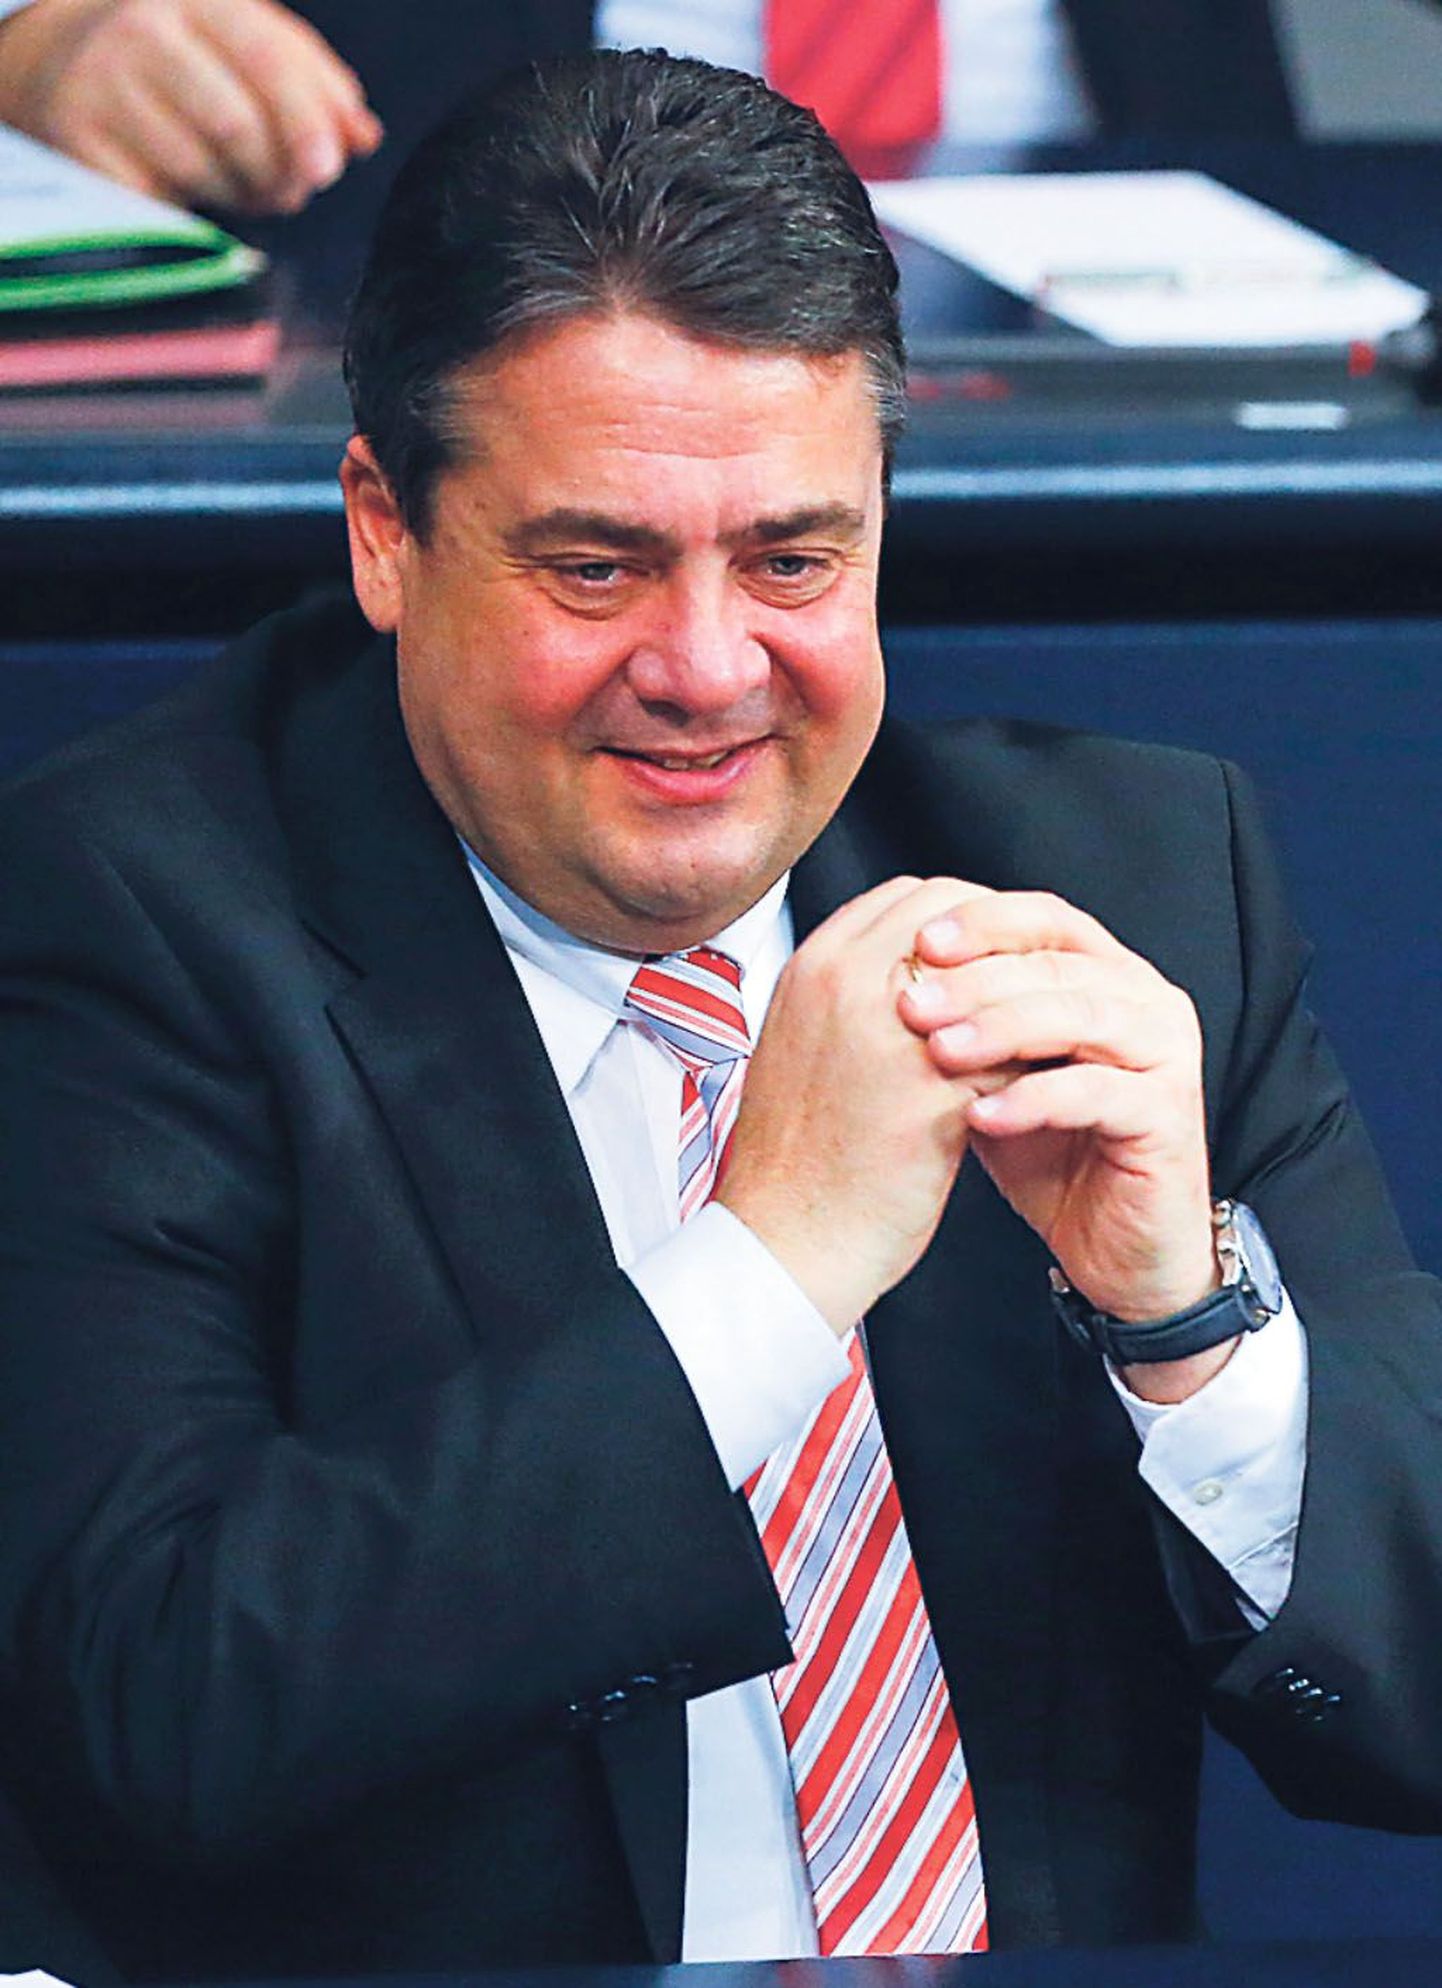 Saksa majandusminister ja asekantsler Sigmar Gabriel.